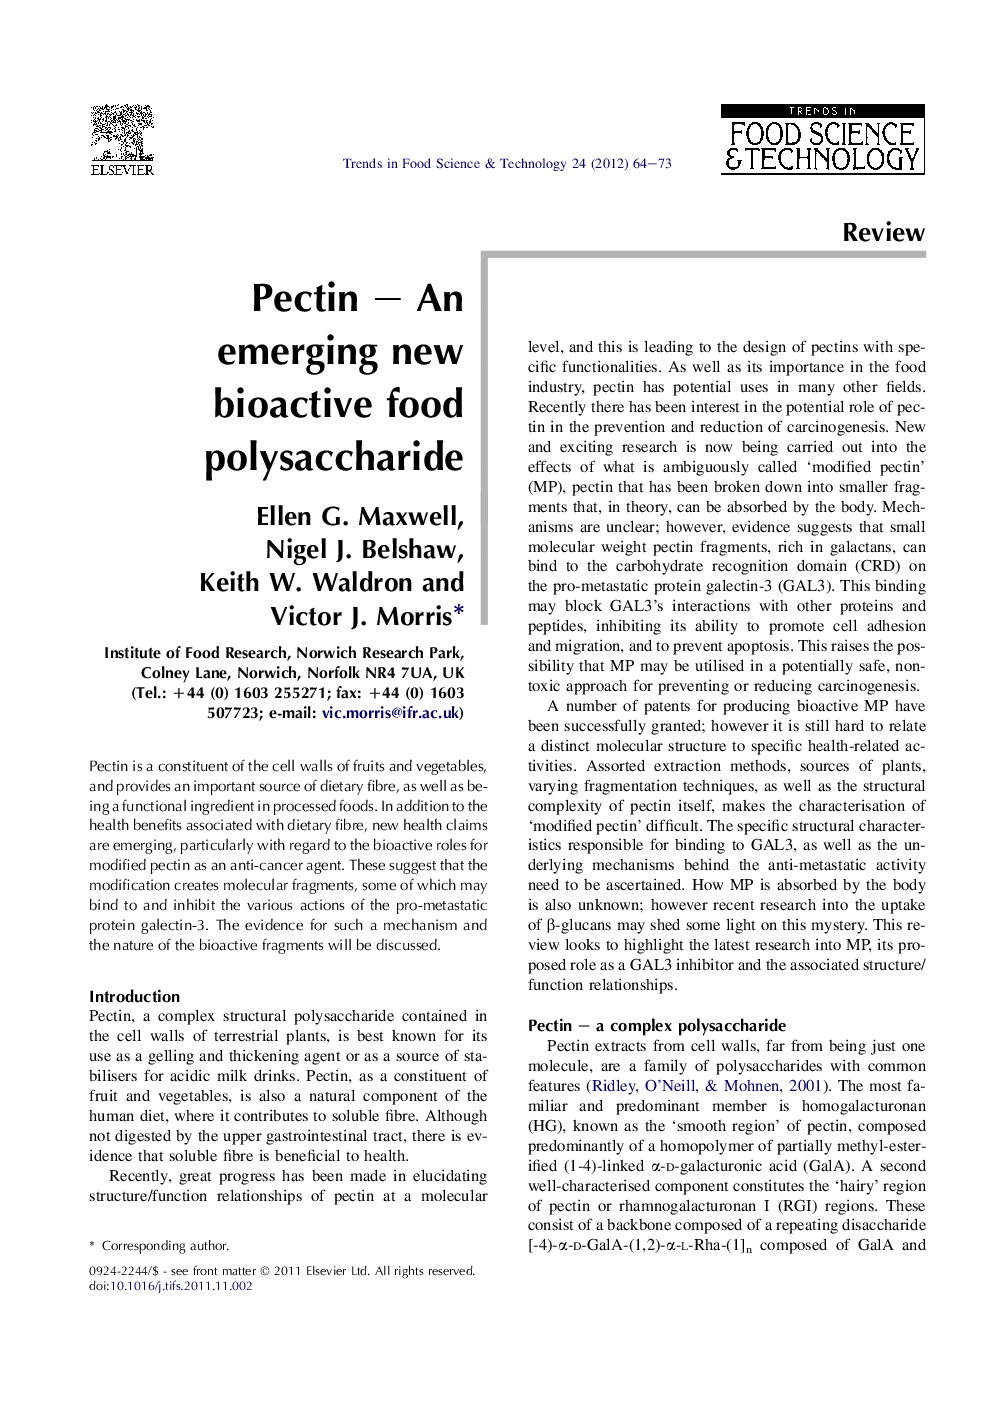 Pectin – An emerging new bioactive food polysaccharide